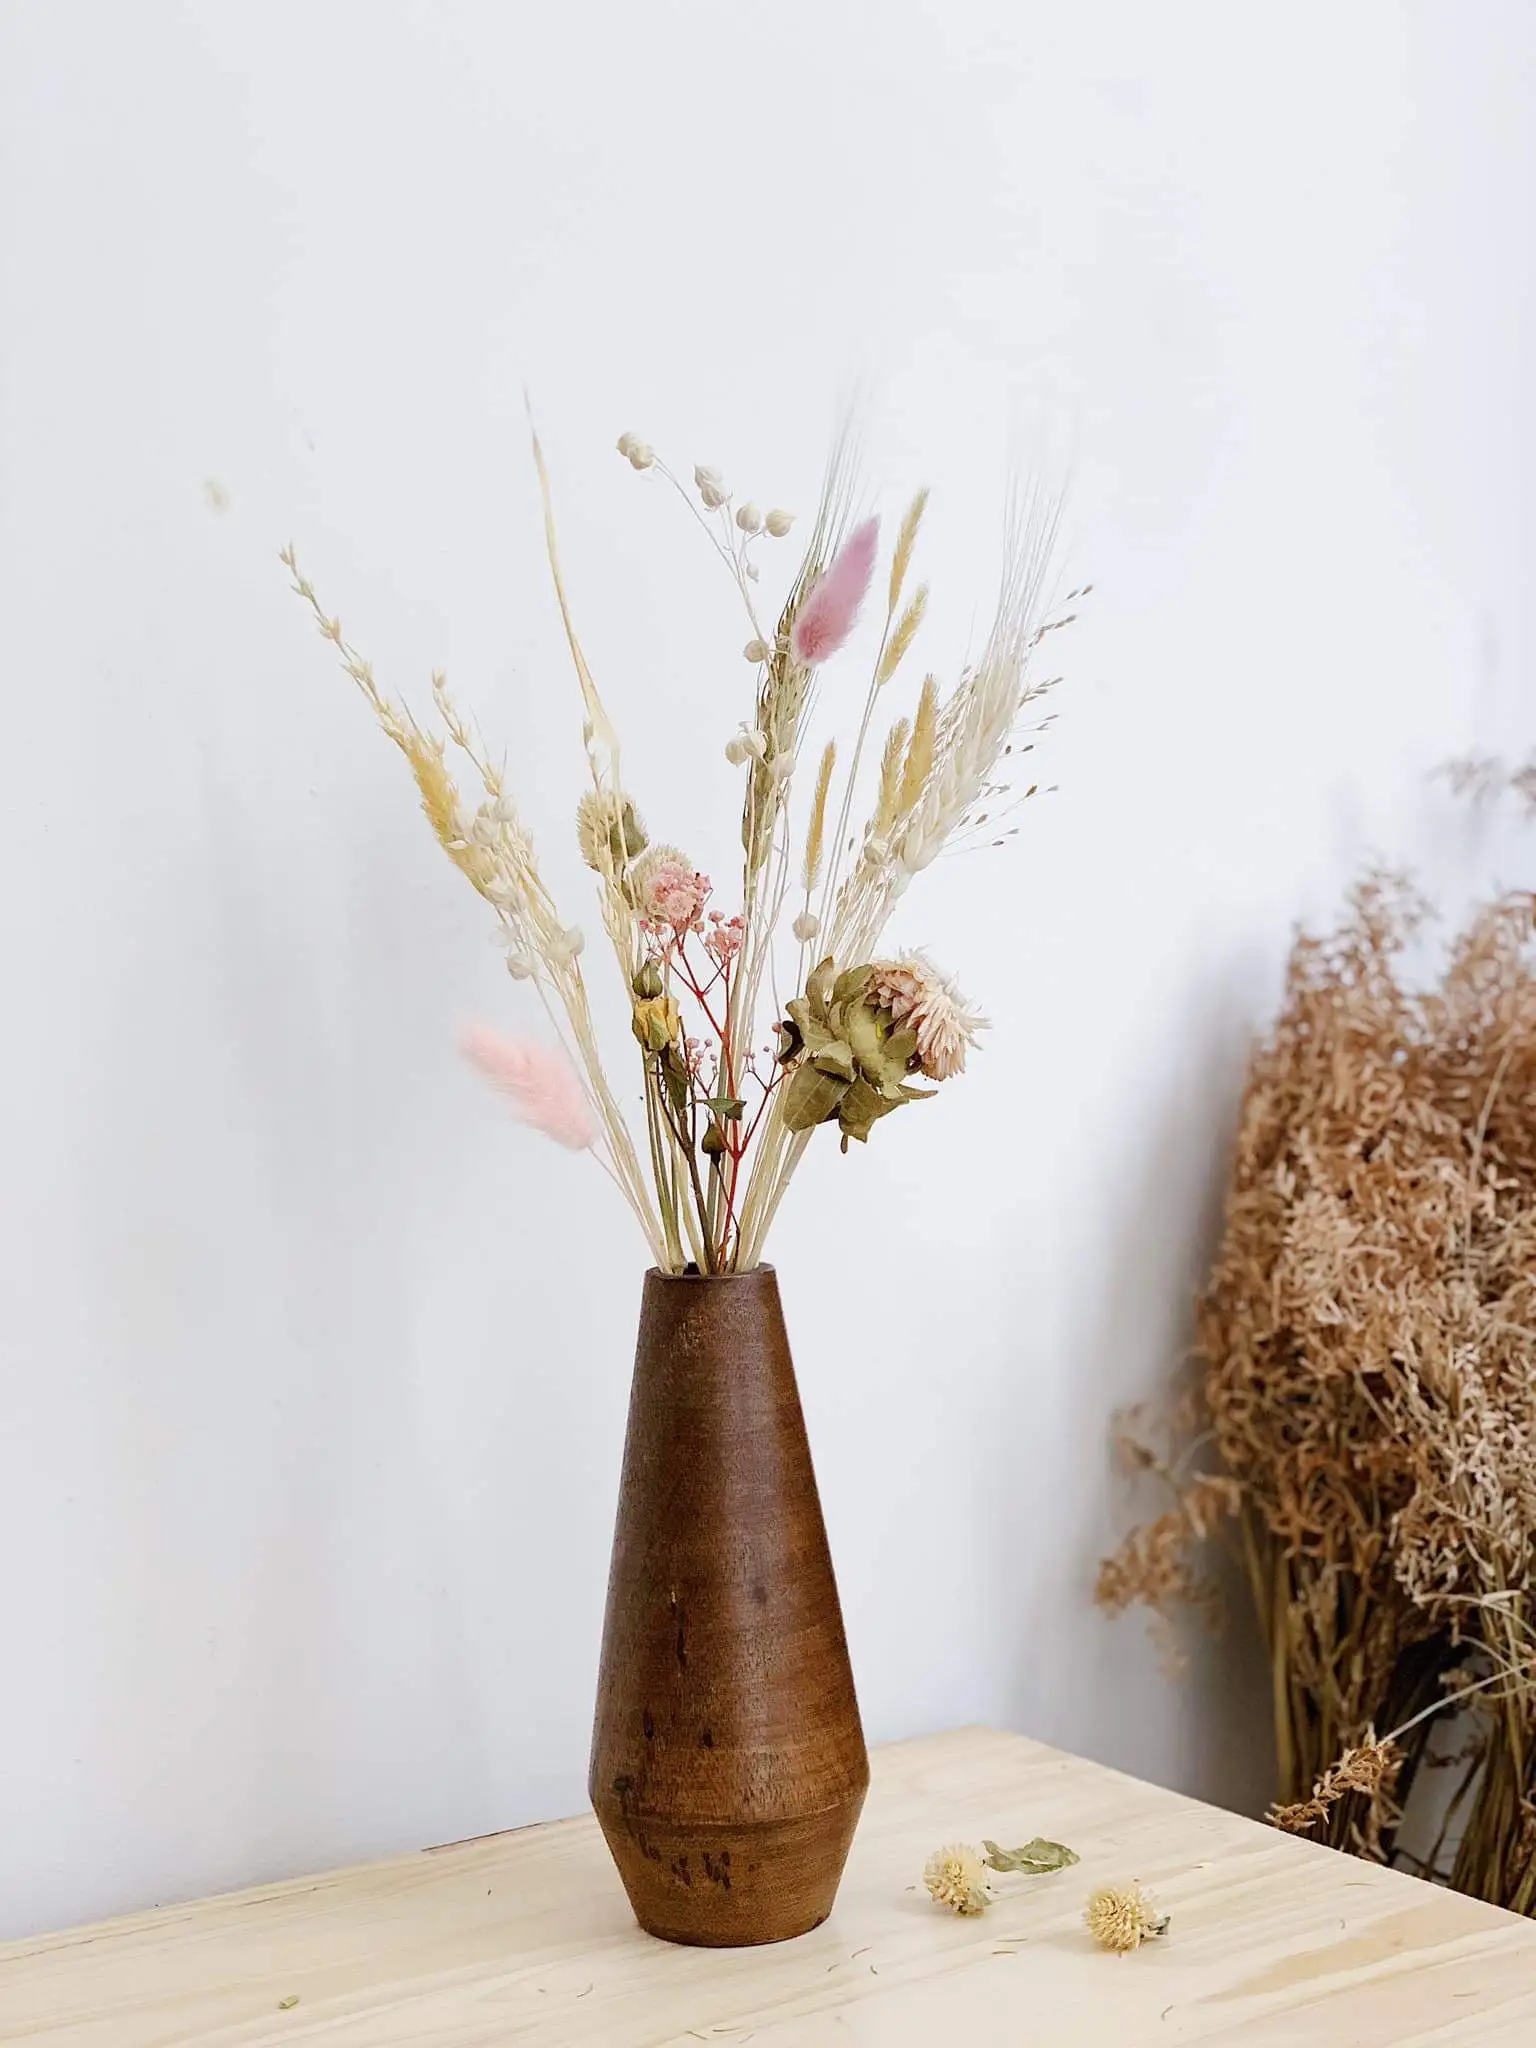 Source Customize Size request Light/ Dark Color Wooden Flower Vase